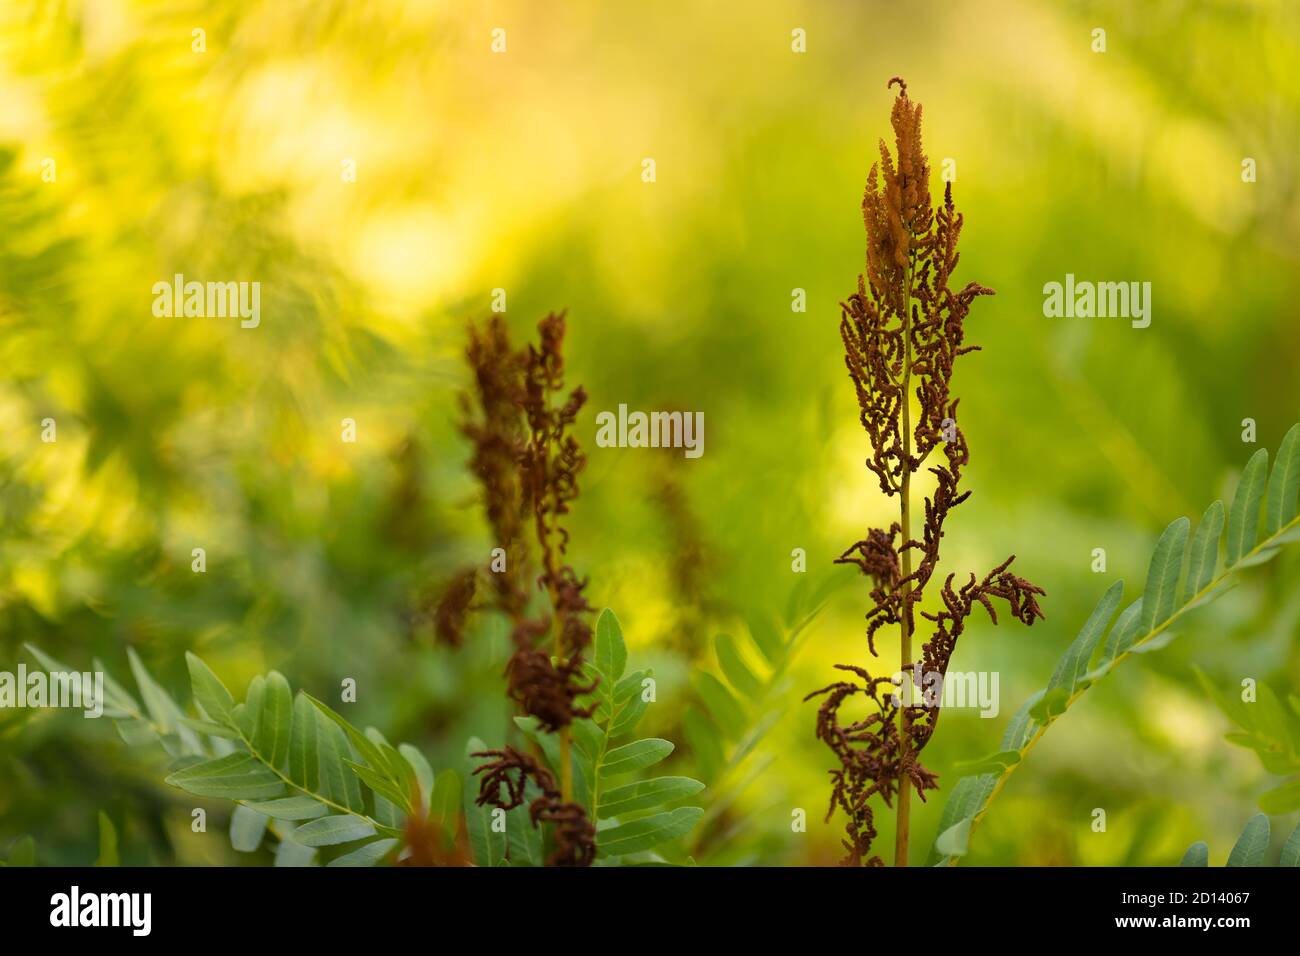 Osmunda fern sporangias and leaves under a warm spring sunlight Stock Photo